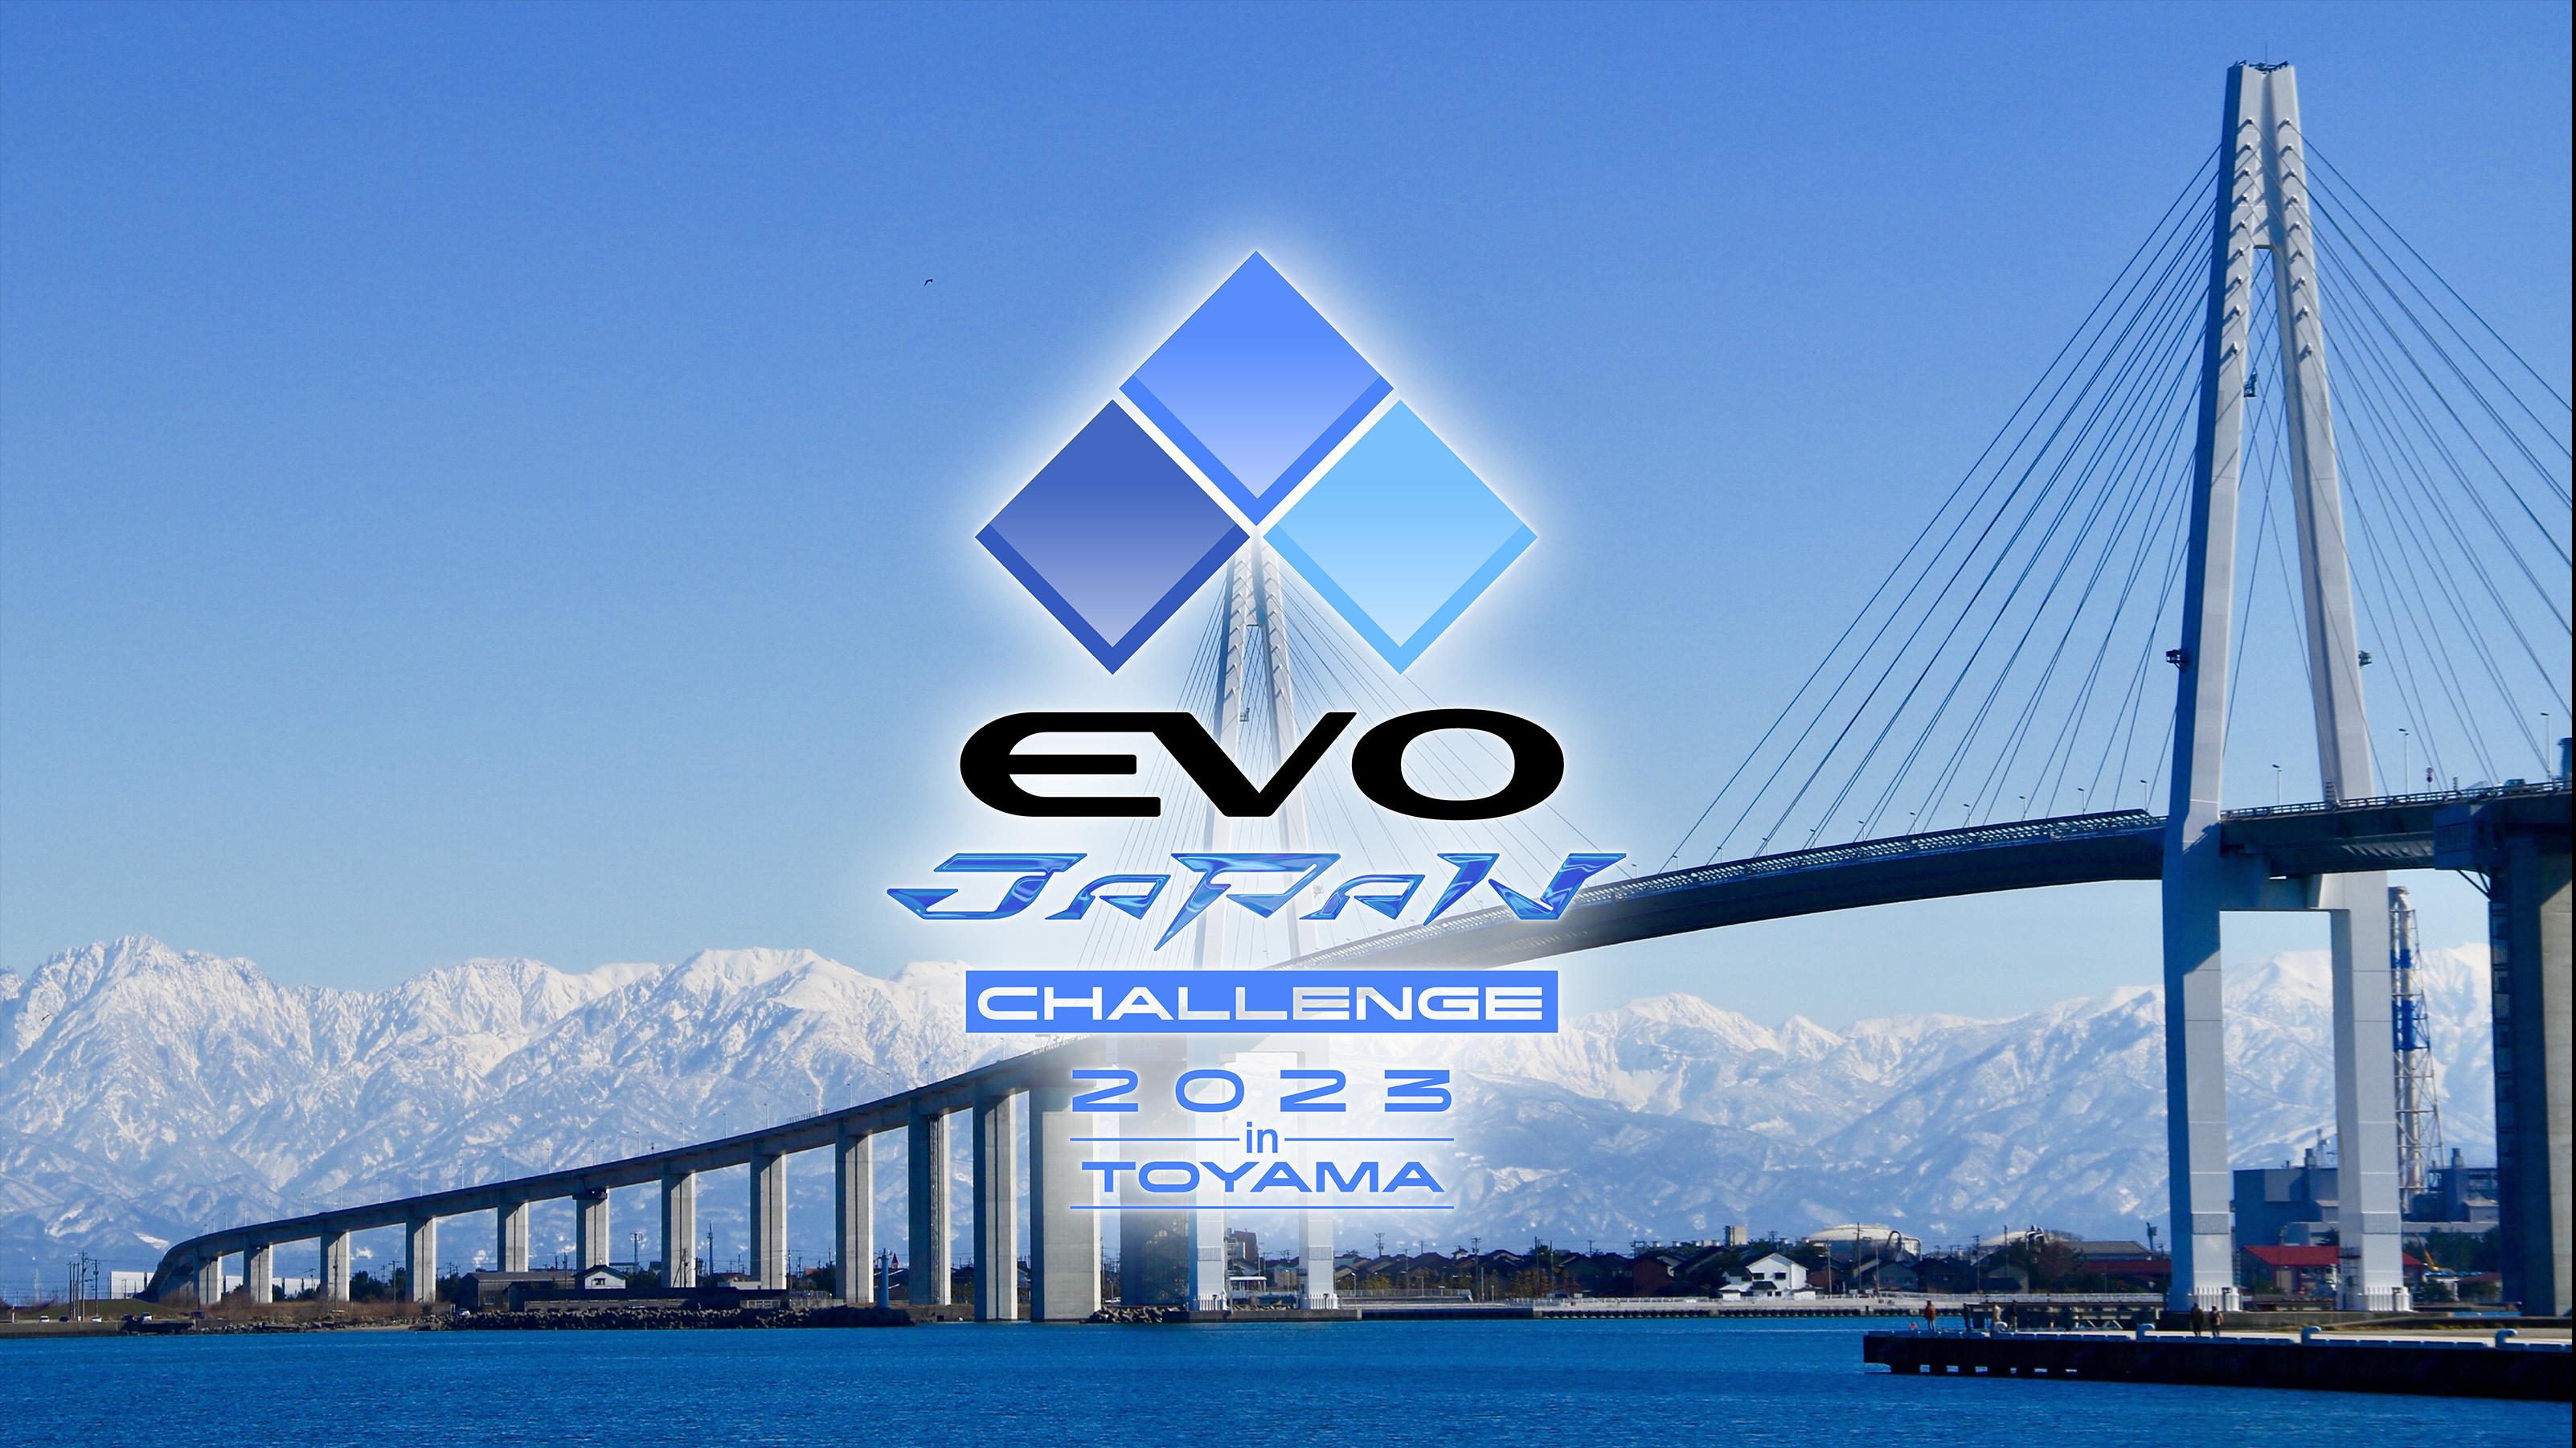 EVO Japan CHALLENGE 2023 in TOYAMA feature image